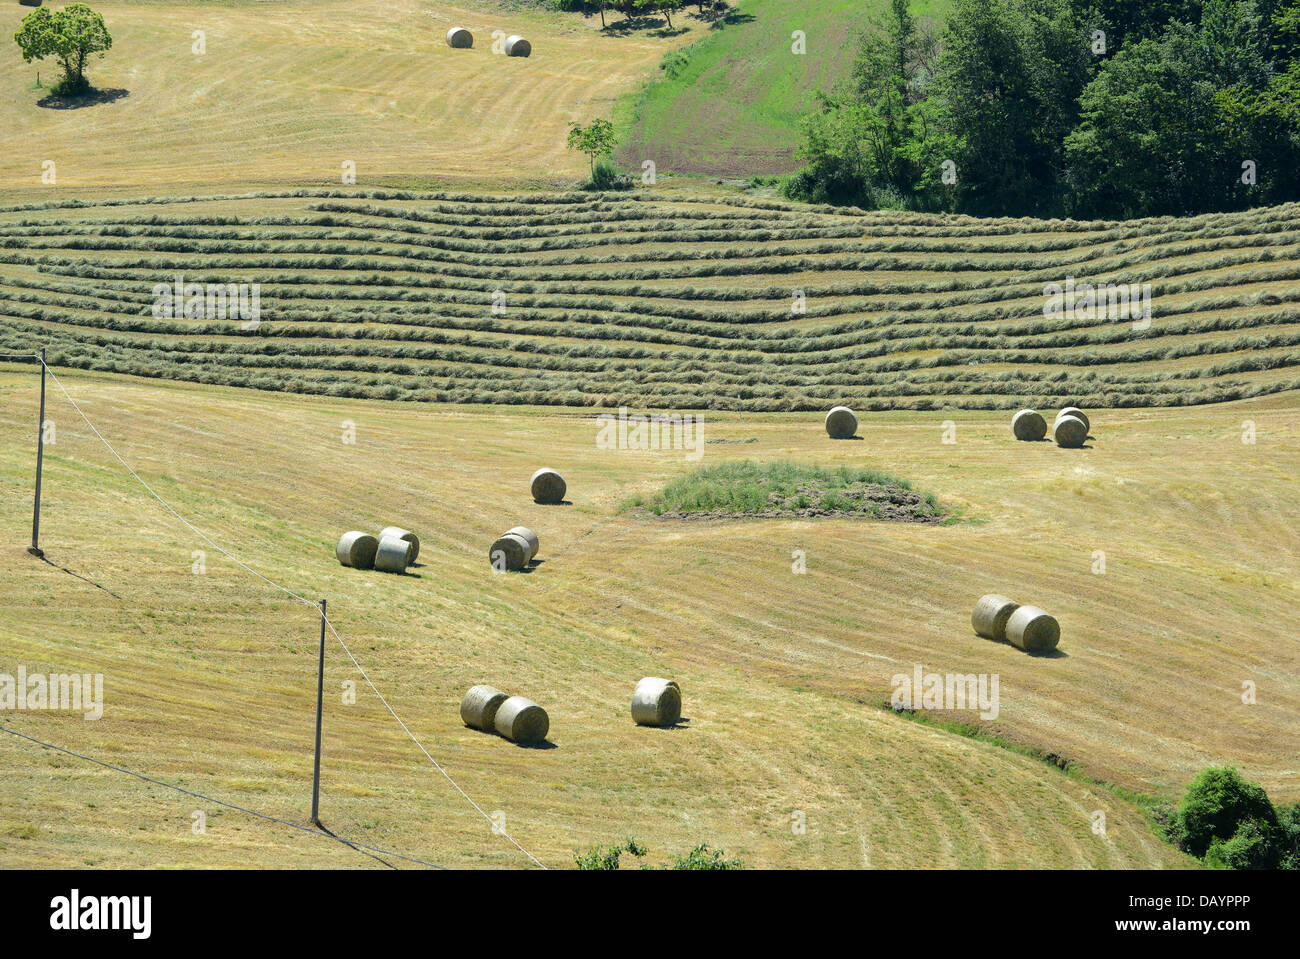 Bales of Hay on farmland Reggio Emilia hills in the Italian region Emilia-Romagna Stock Photo